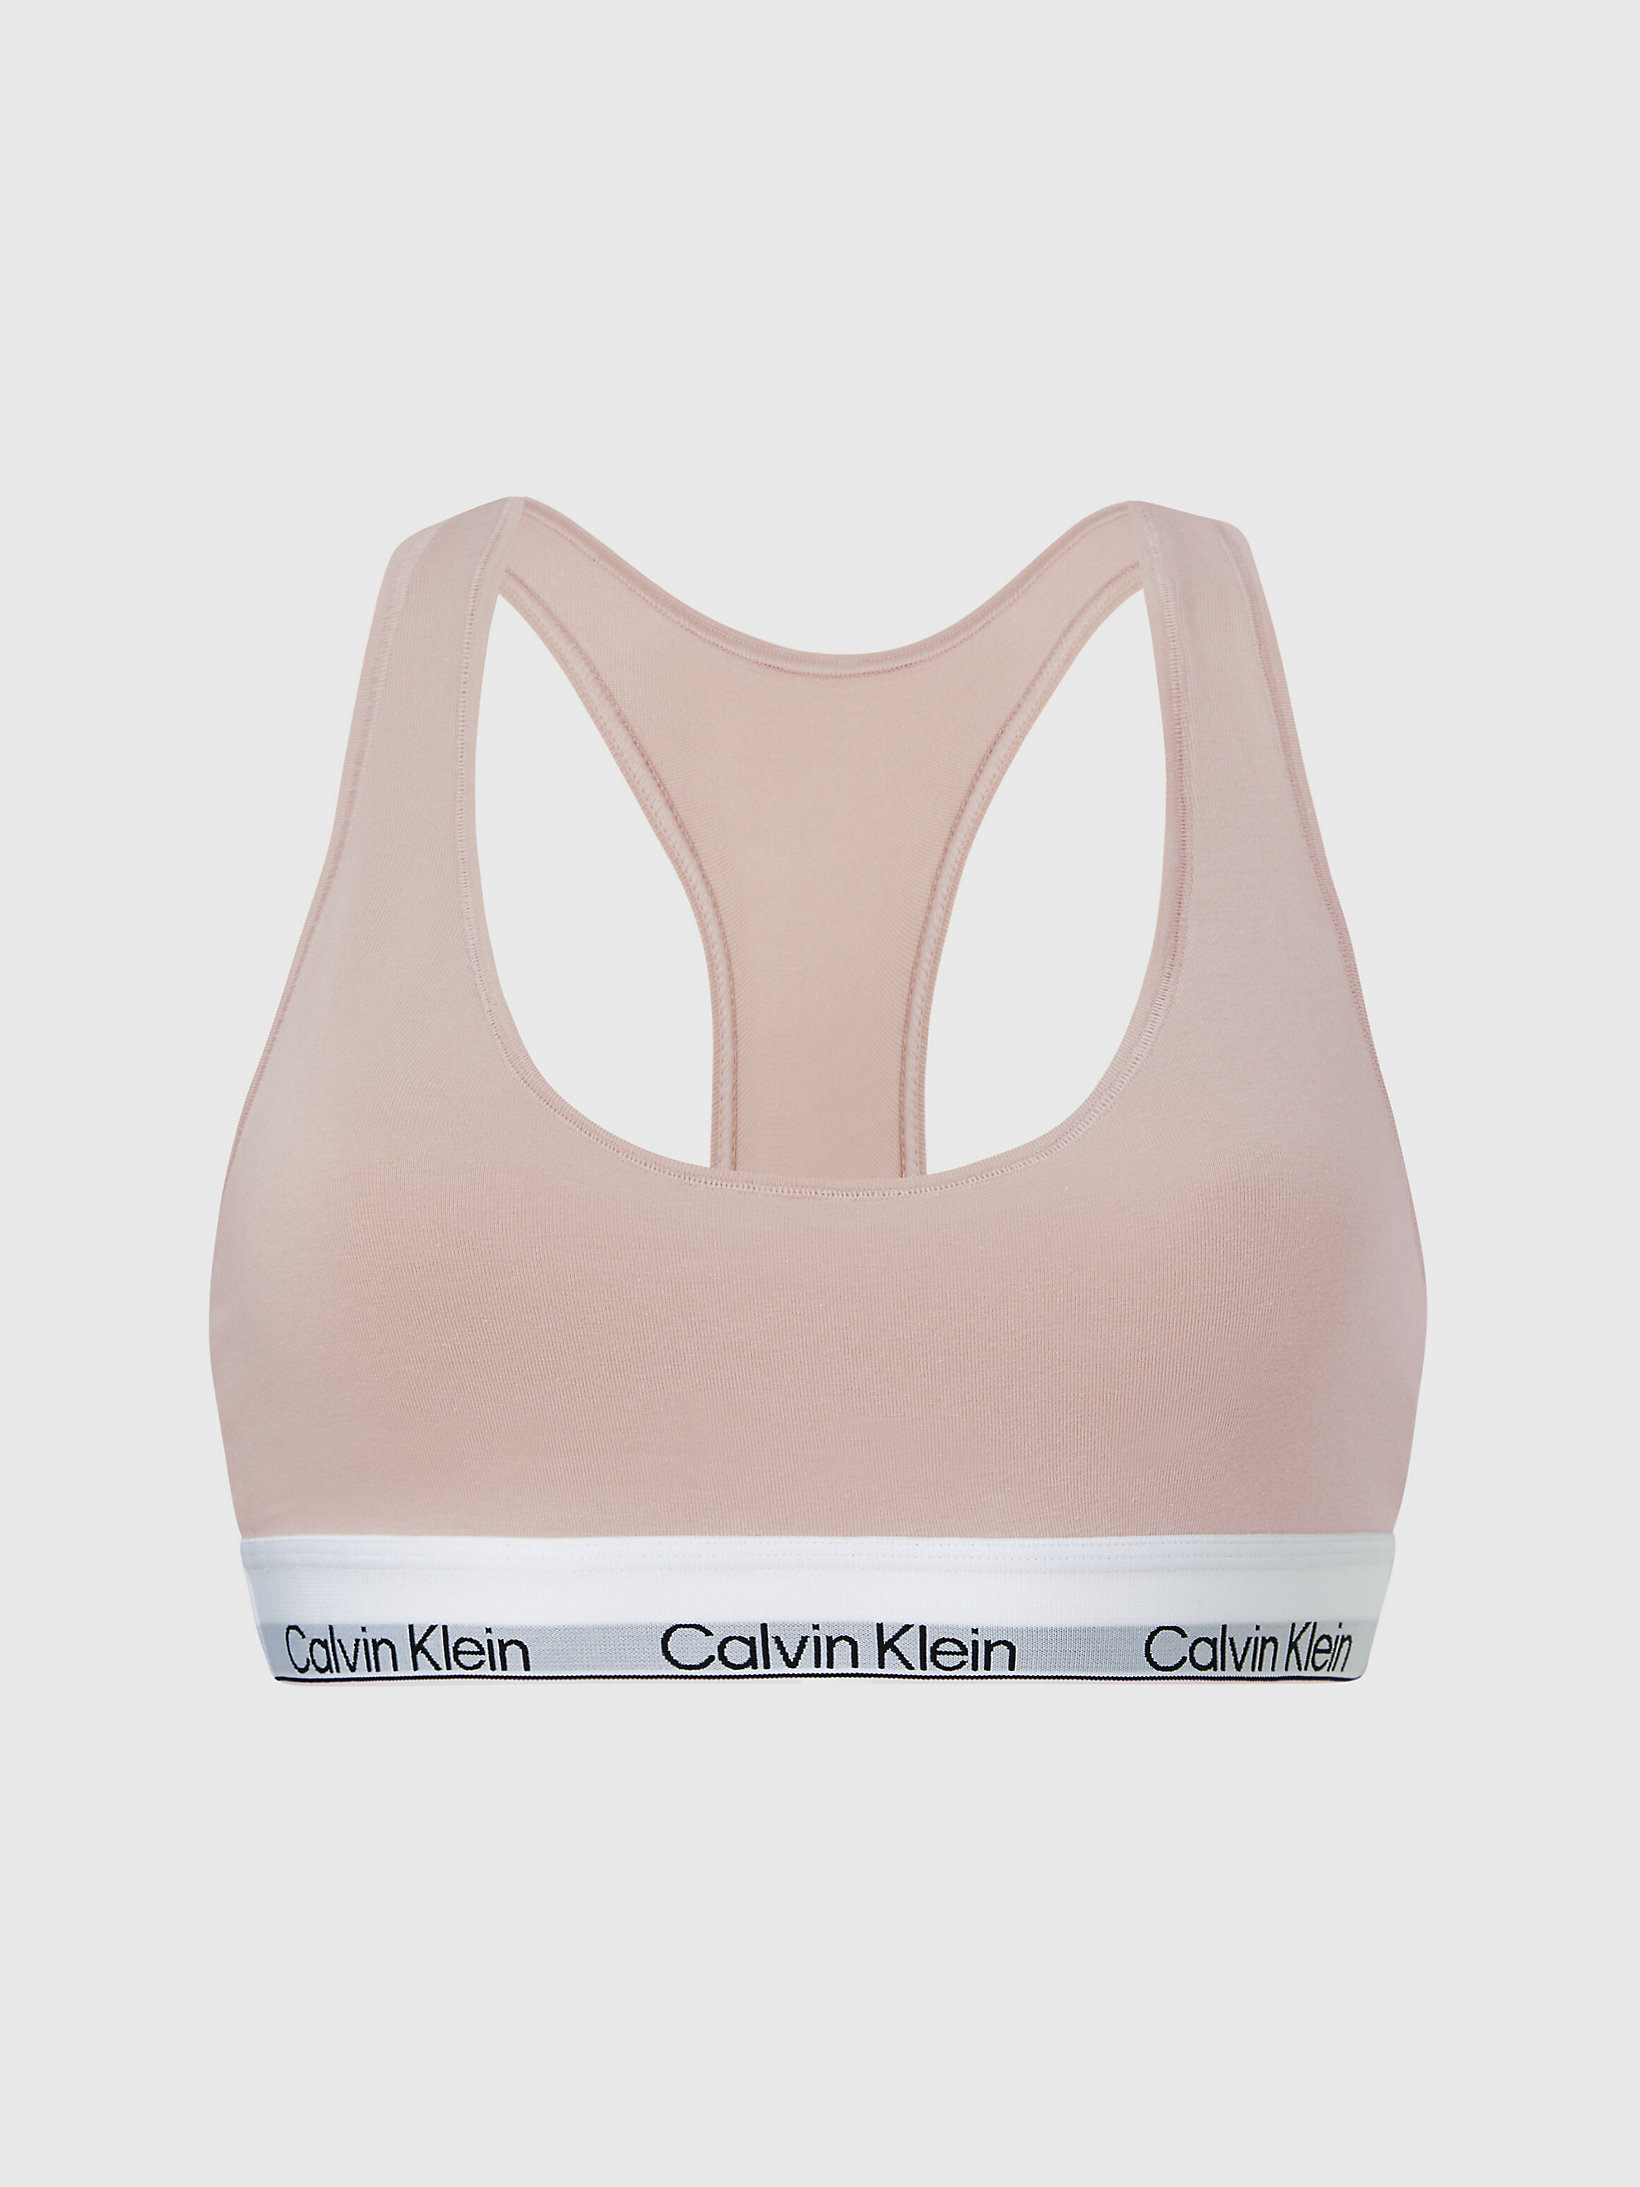 Corpiño - Modern Cotton > Cedar > undefined mujer > Calvin Klein